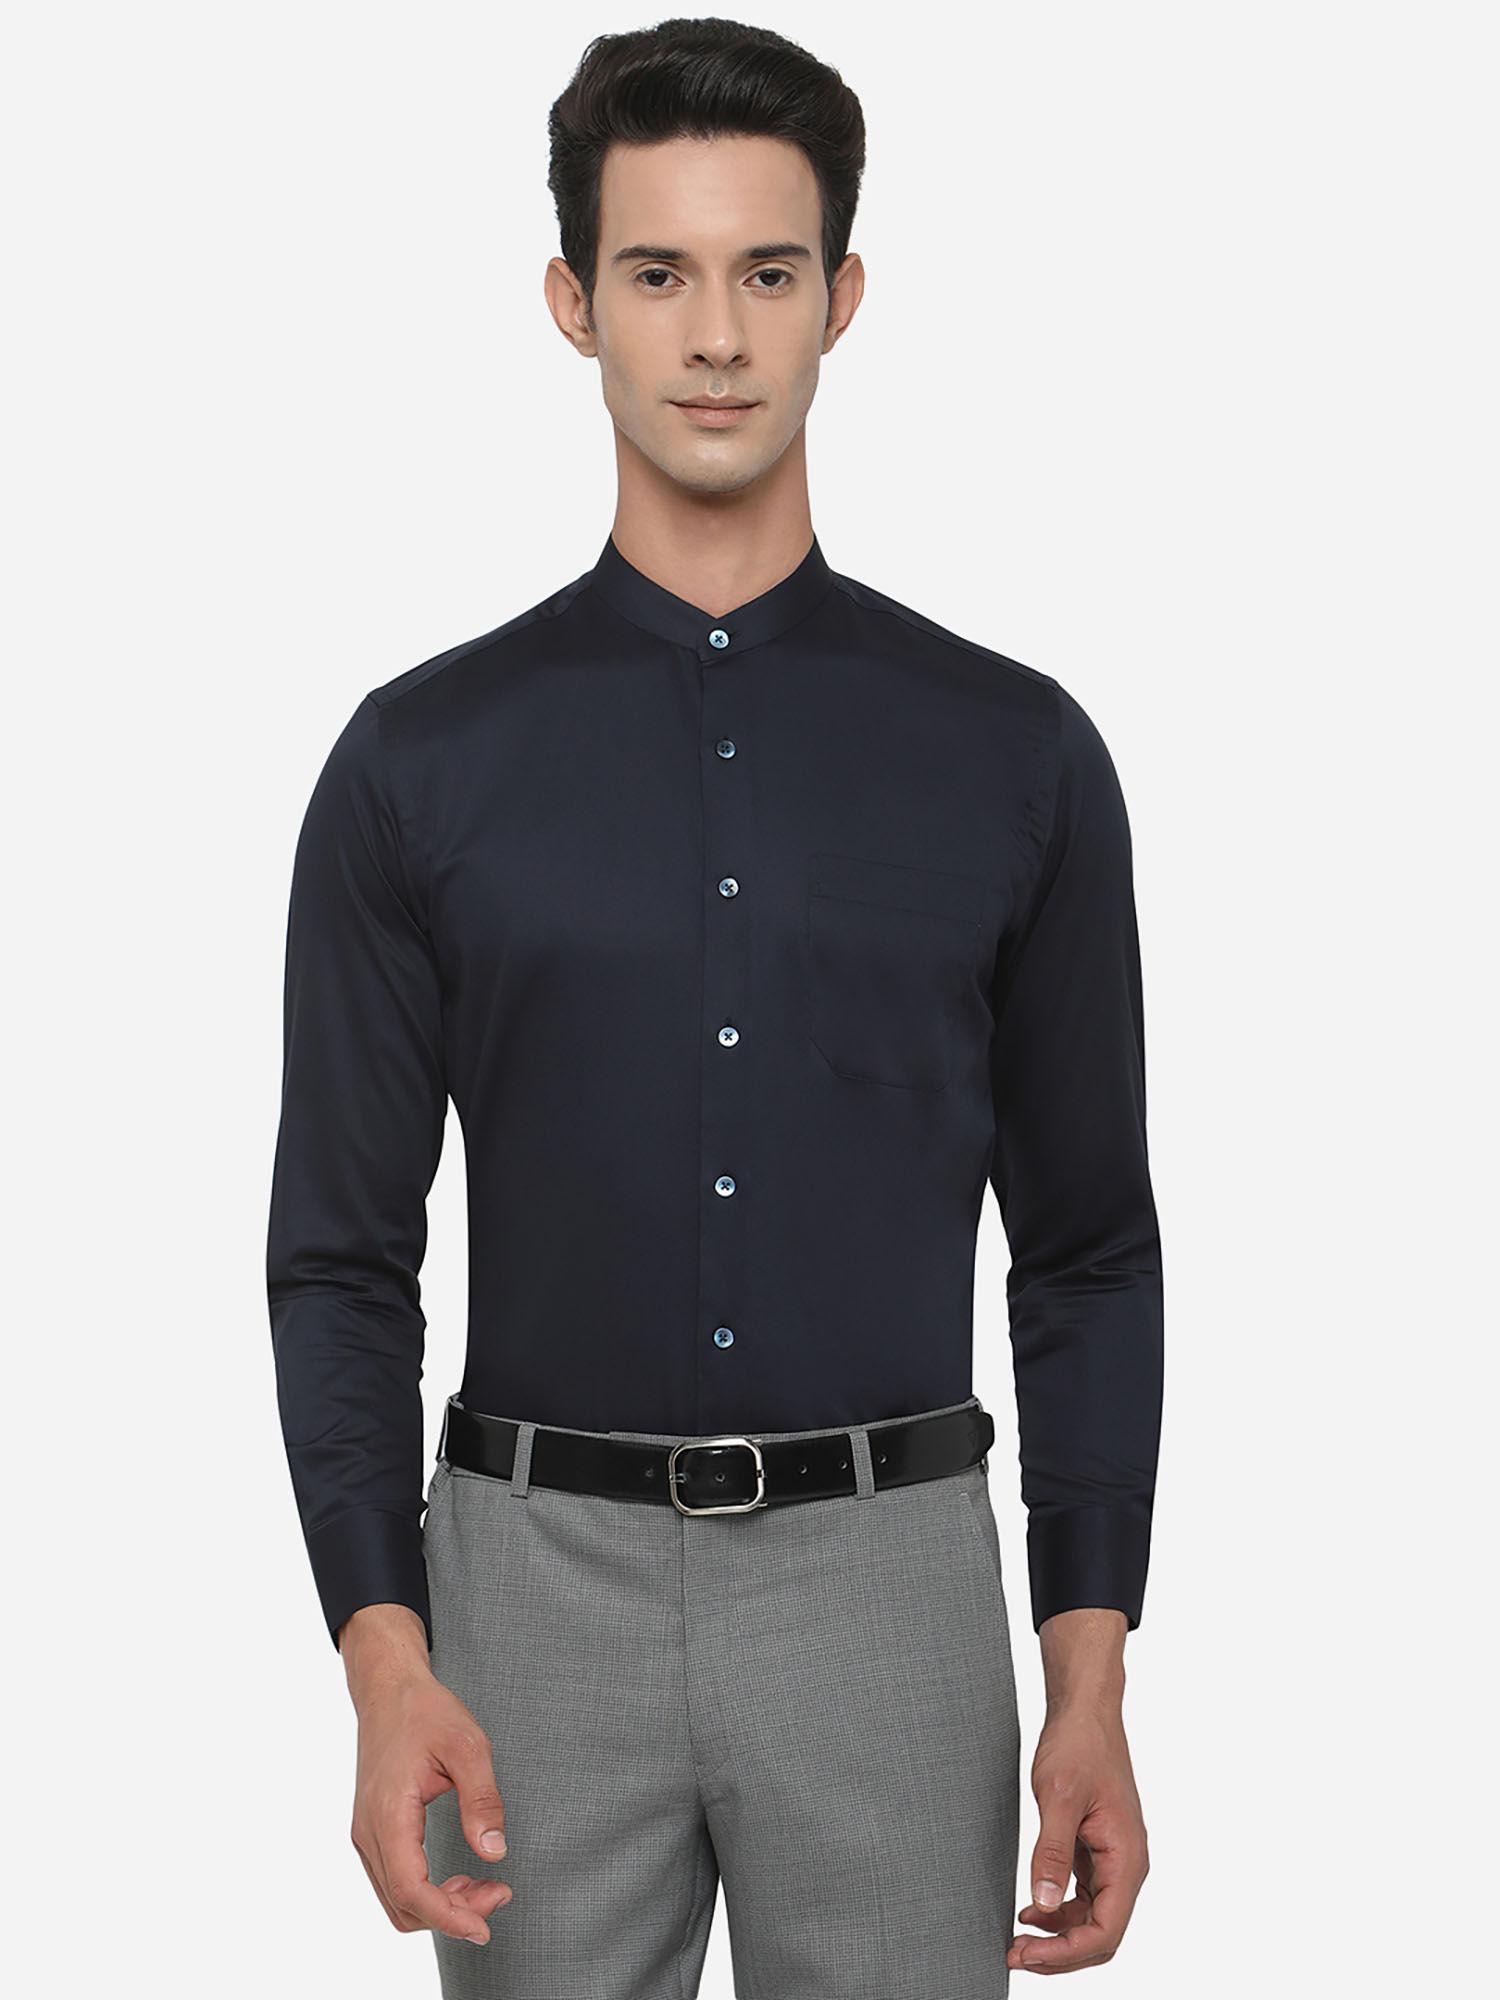 mens-solid-dark-blue-cotton-slim-fit-formal-shirt